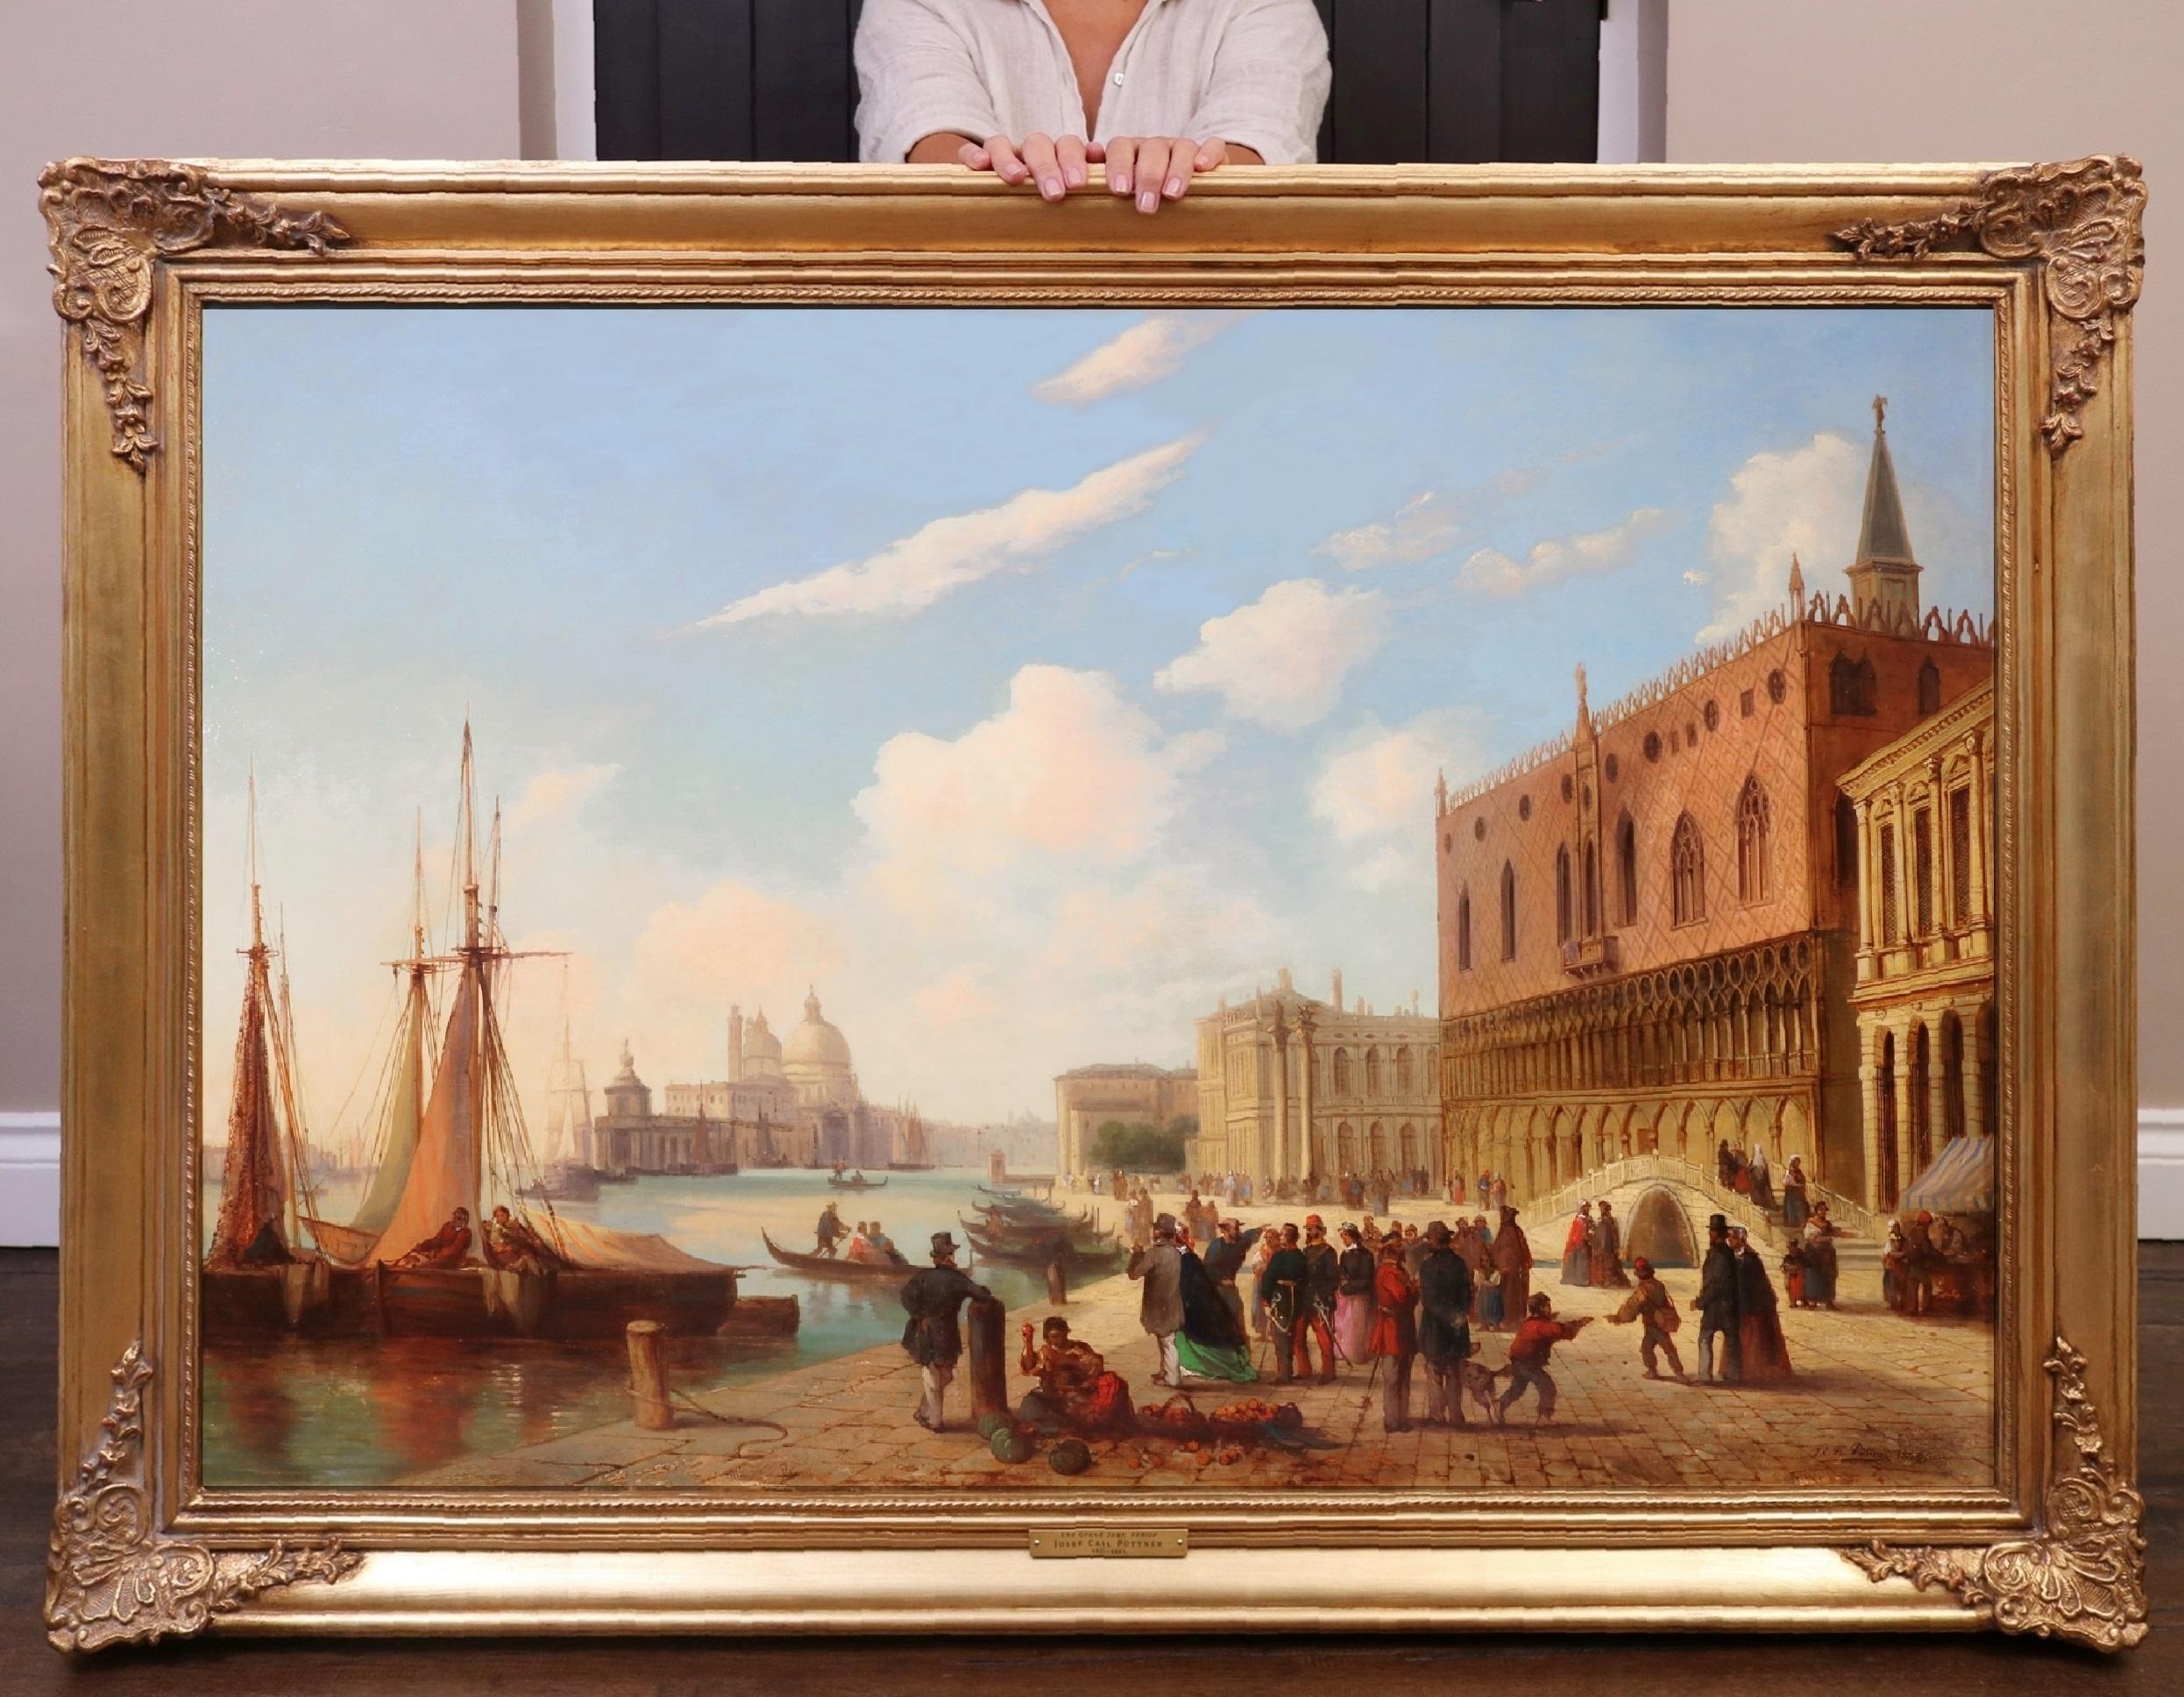 Josef Carl Puttner Figurative Painting - The Grand Tour Venice - Large 19th Century Venetian Oil Painting Ducal Palace